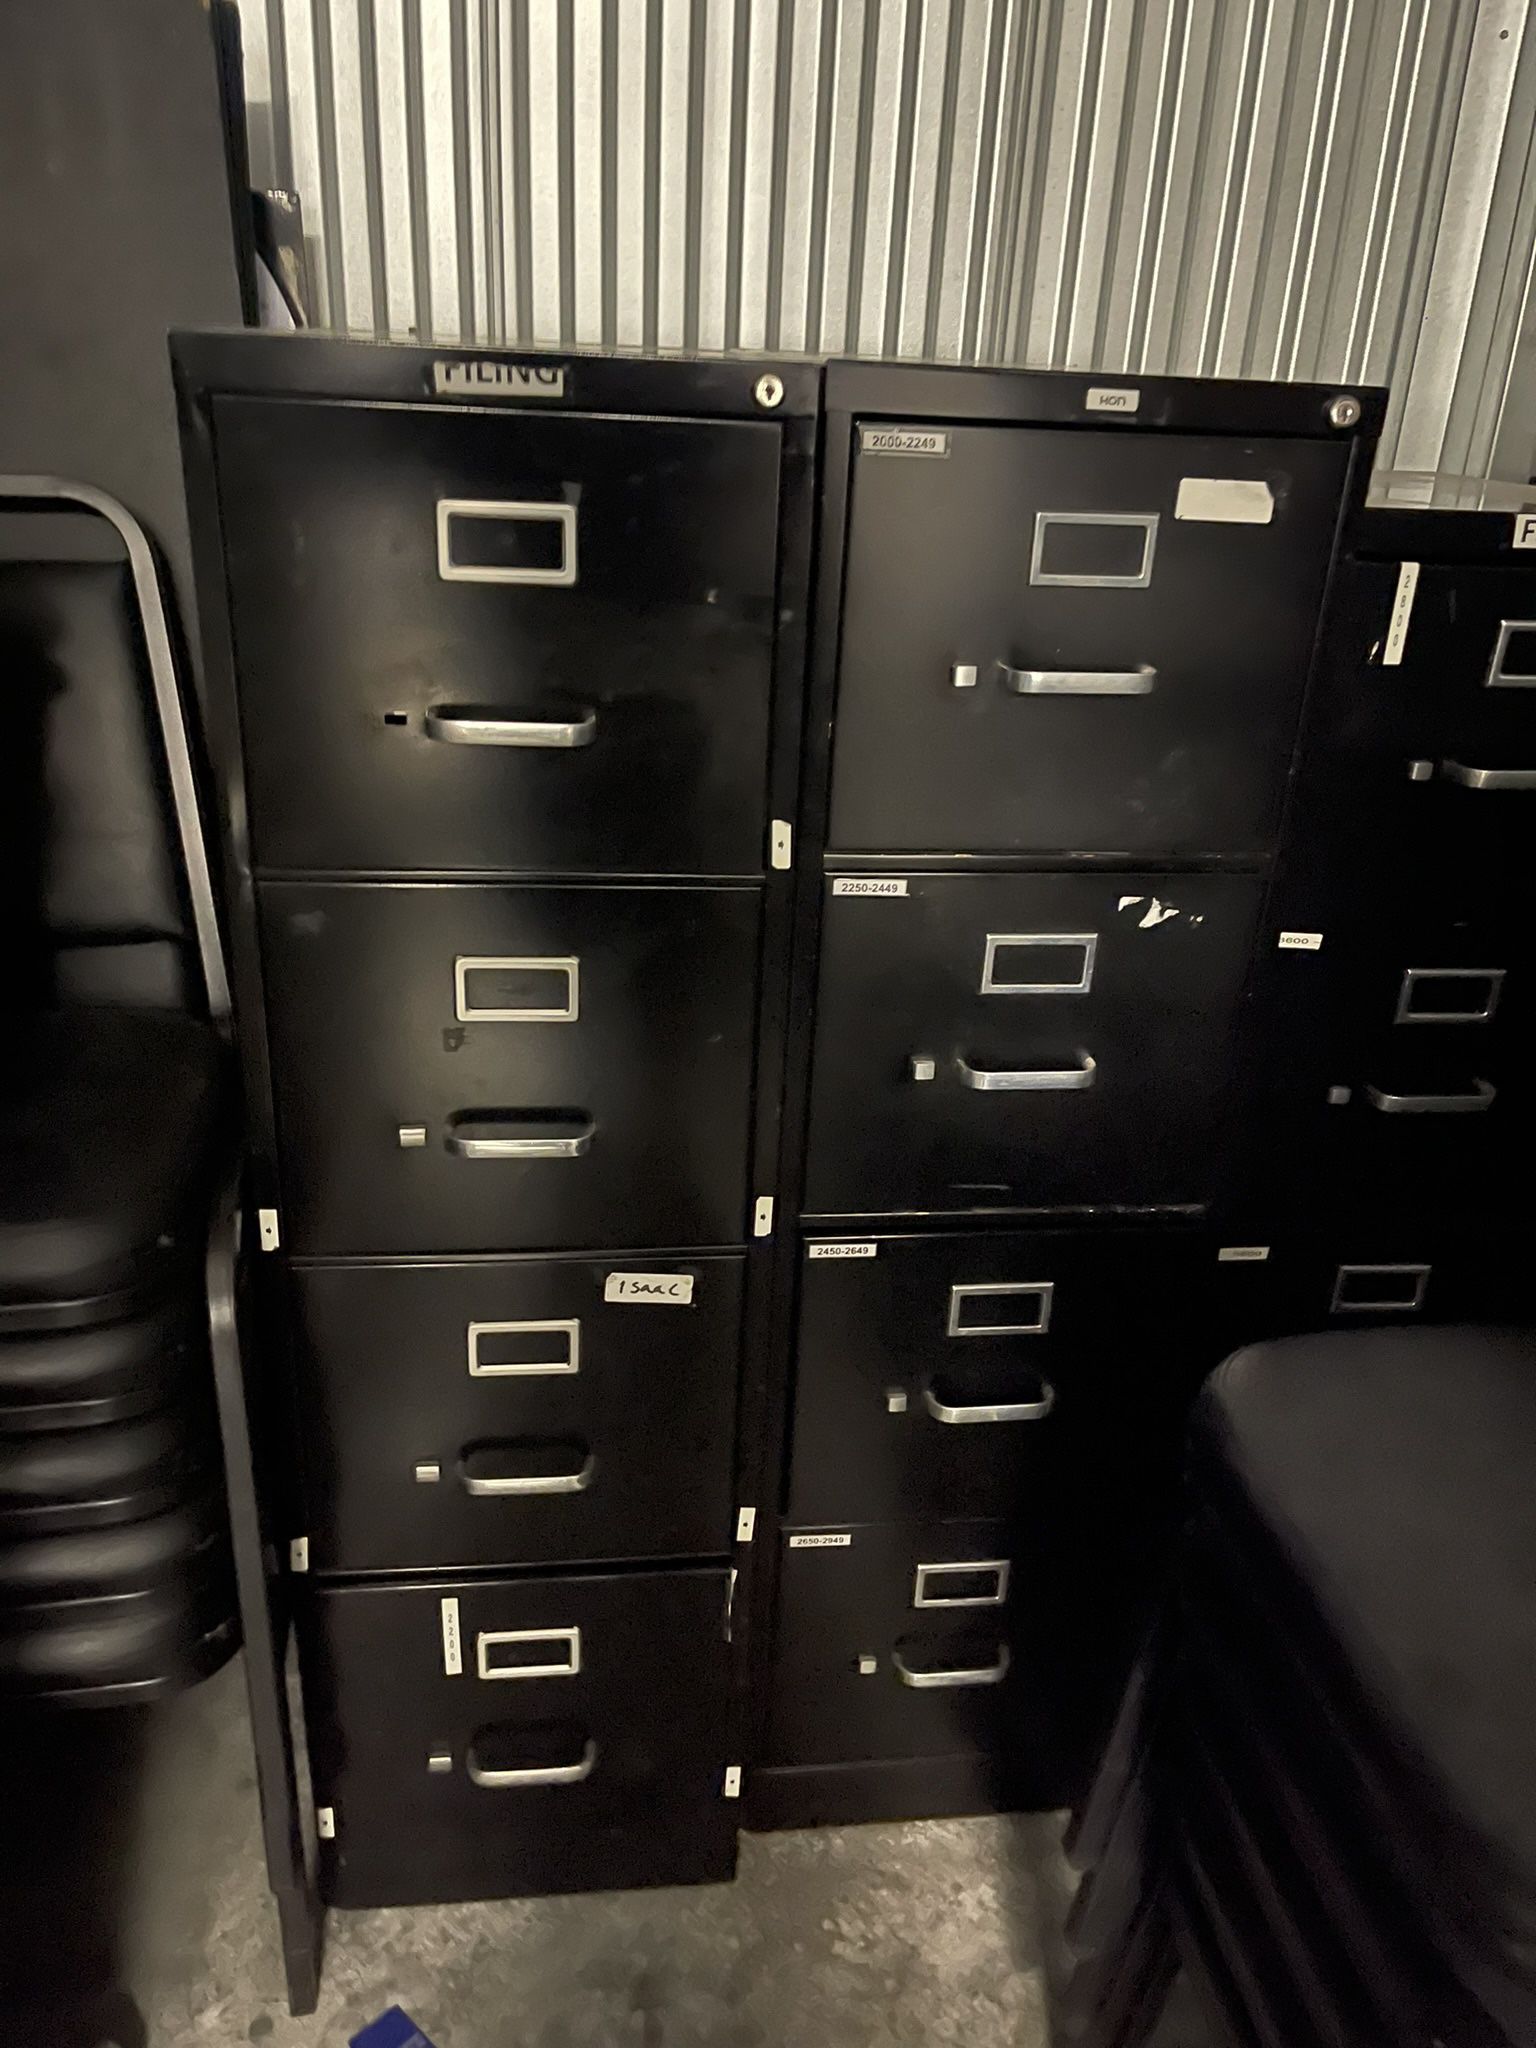 HON File Cabinets